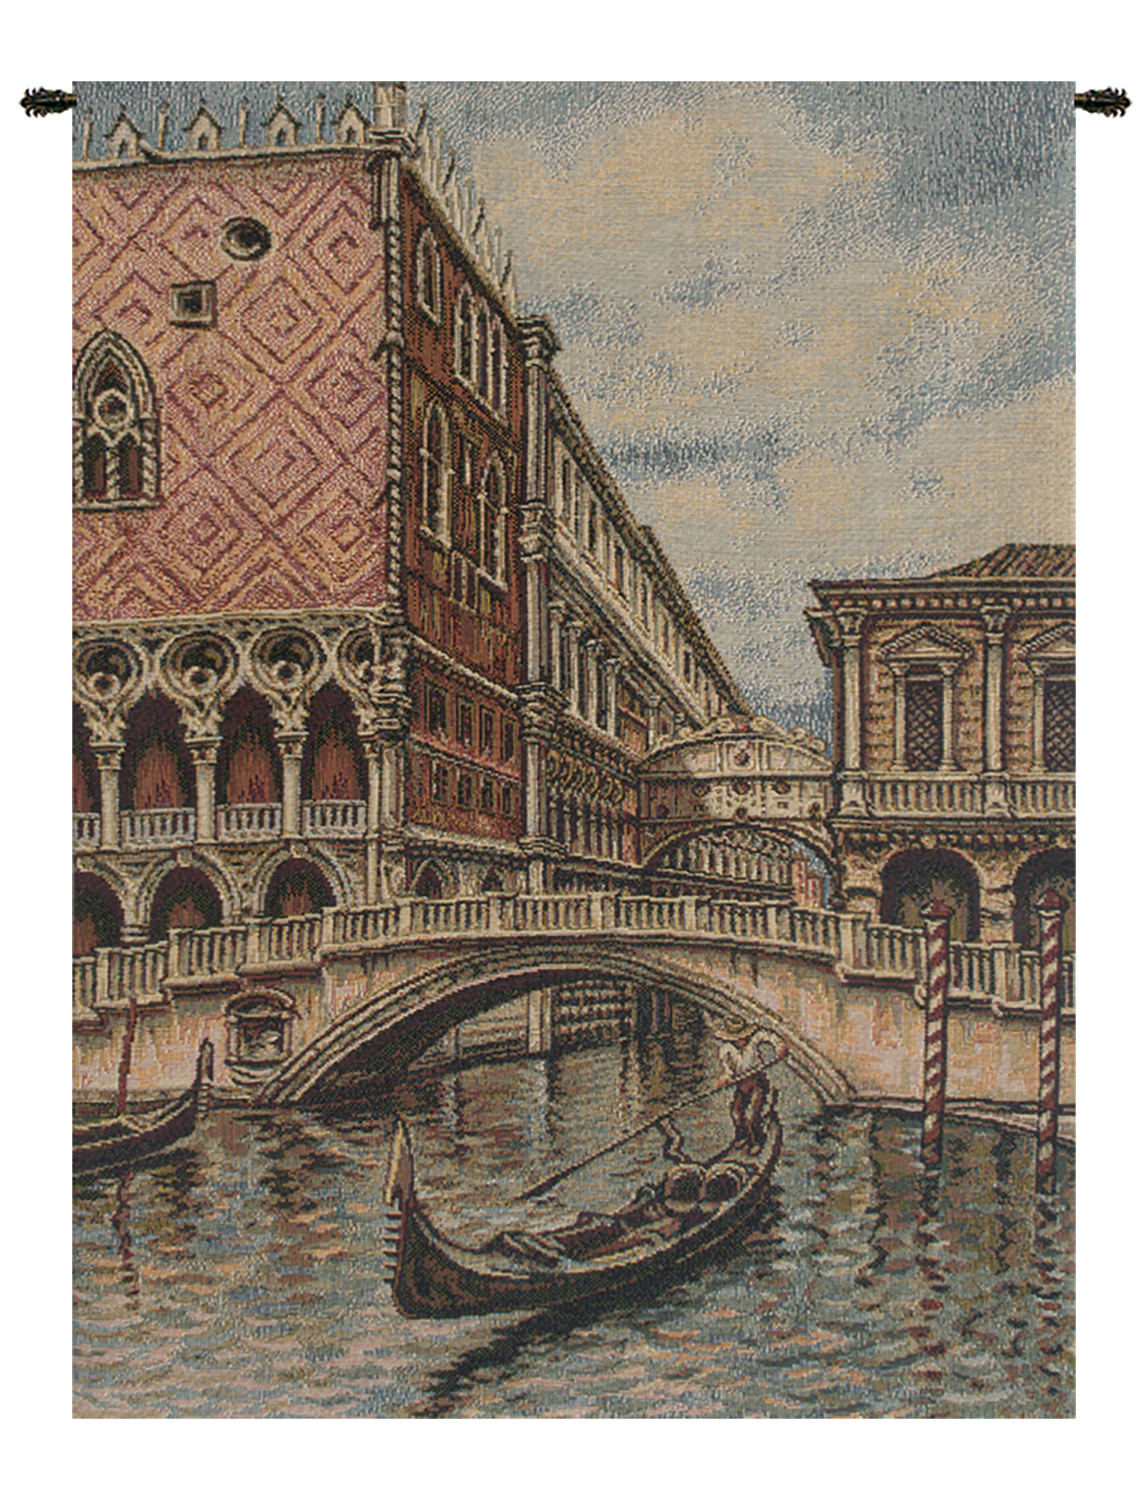 Venice II Italian Tapestry Wall Hanging Woven in Italy, Landscape Lake Scenery